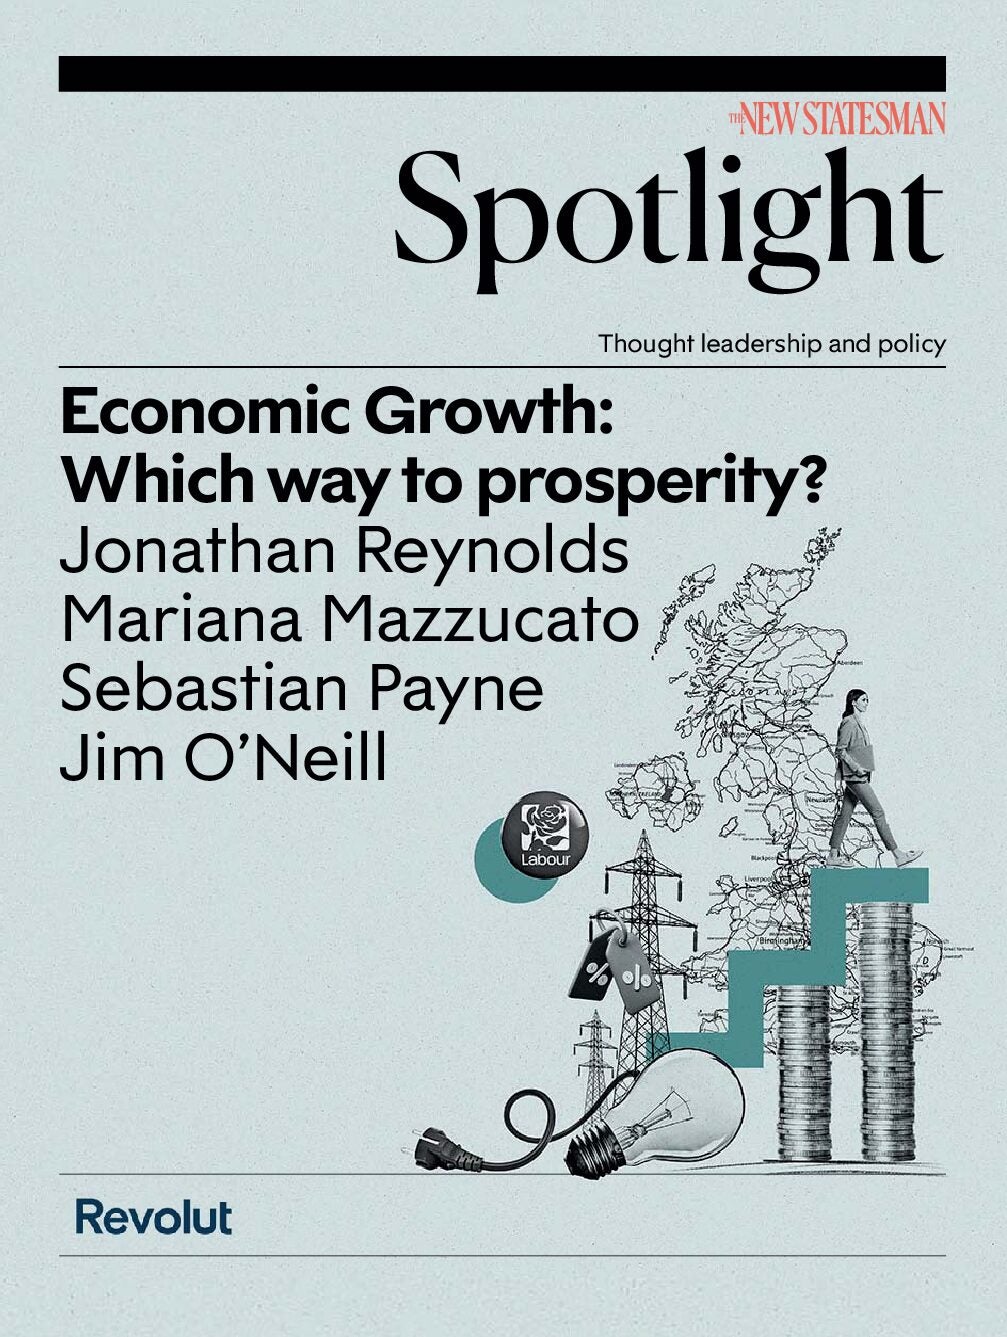 Economic Growth: Which way to prosperity?